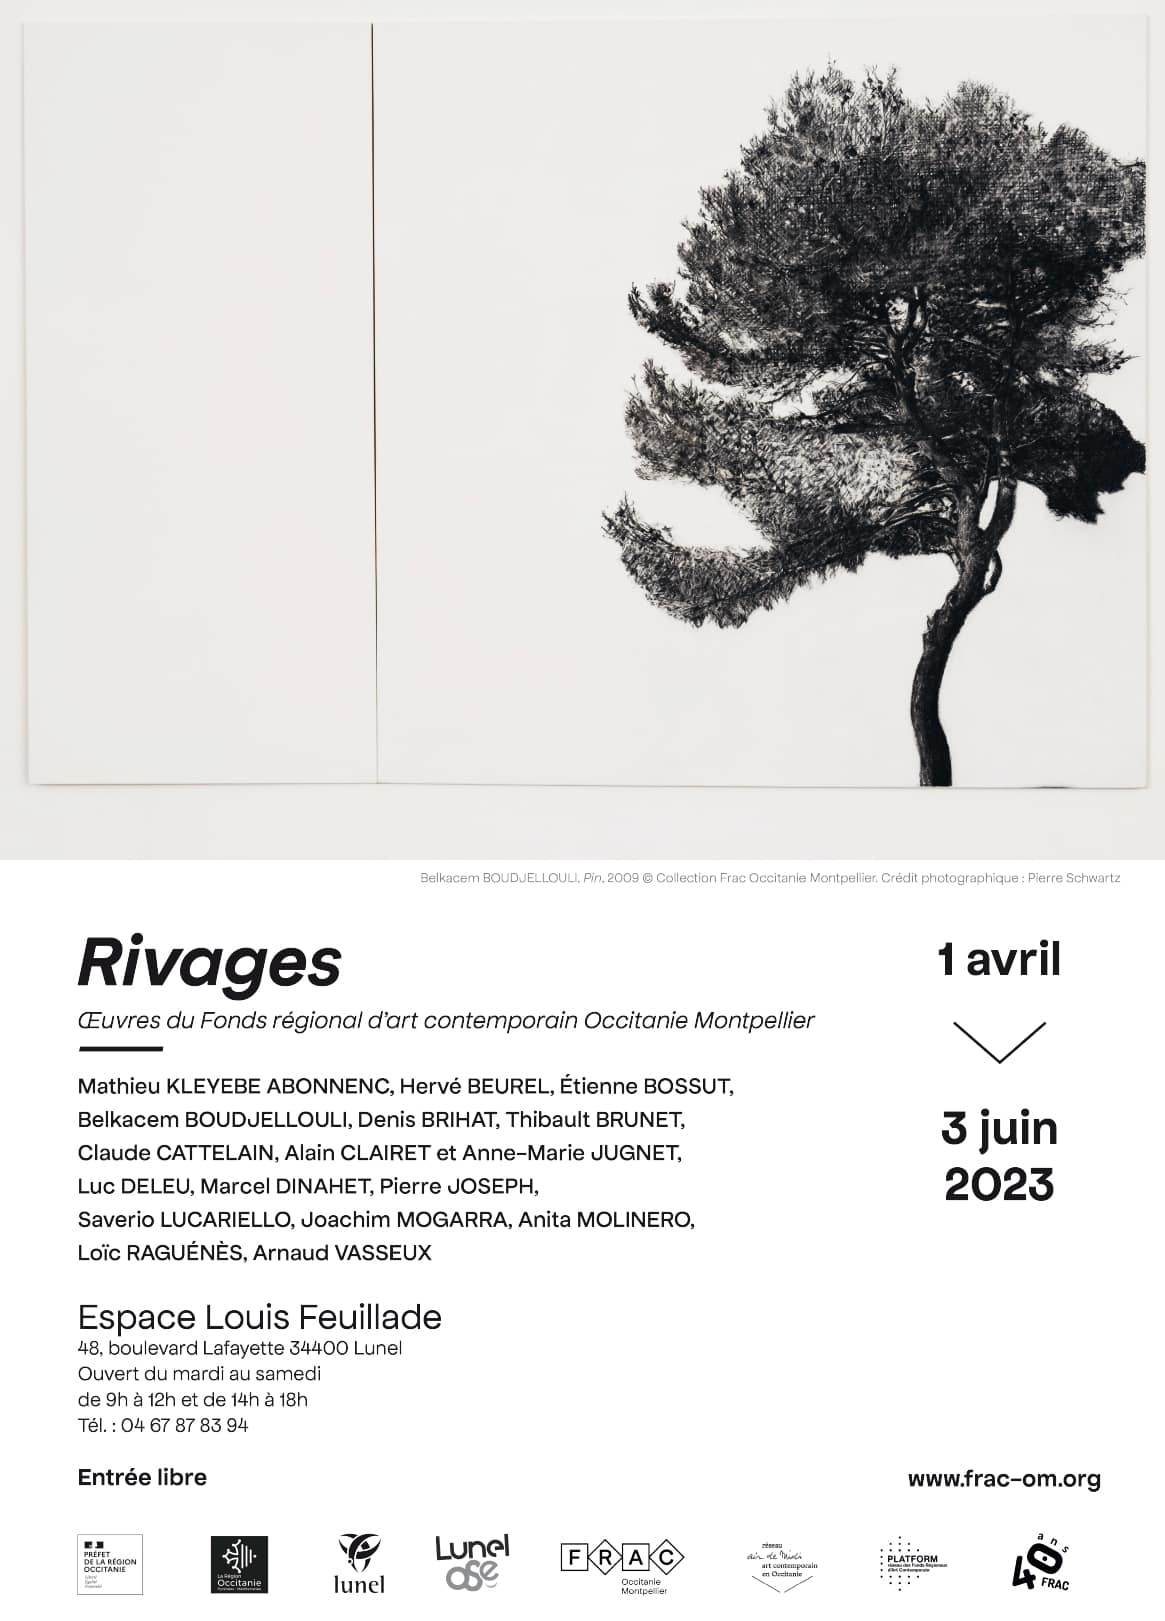 Rivages - espace Louis feuillade -01 04 au 03 06 2023